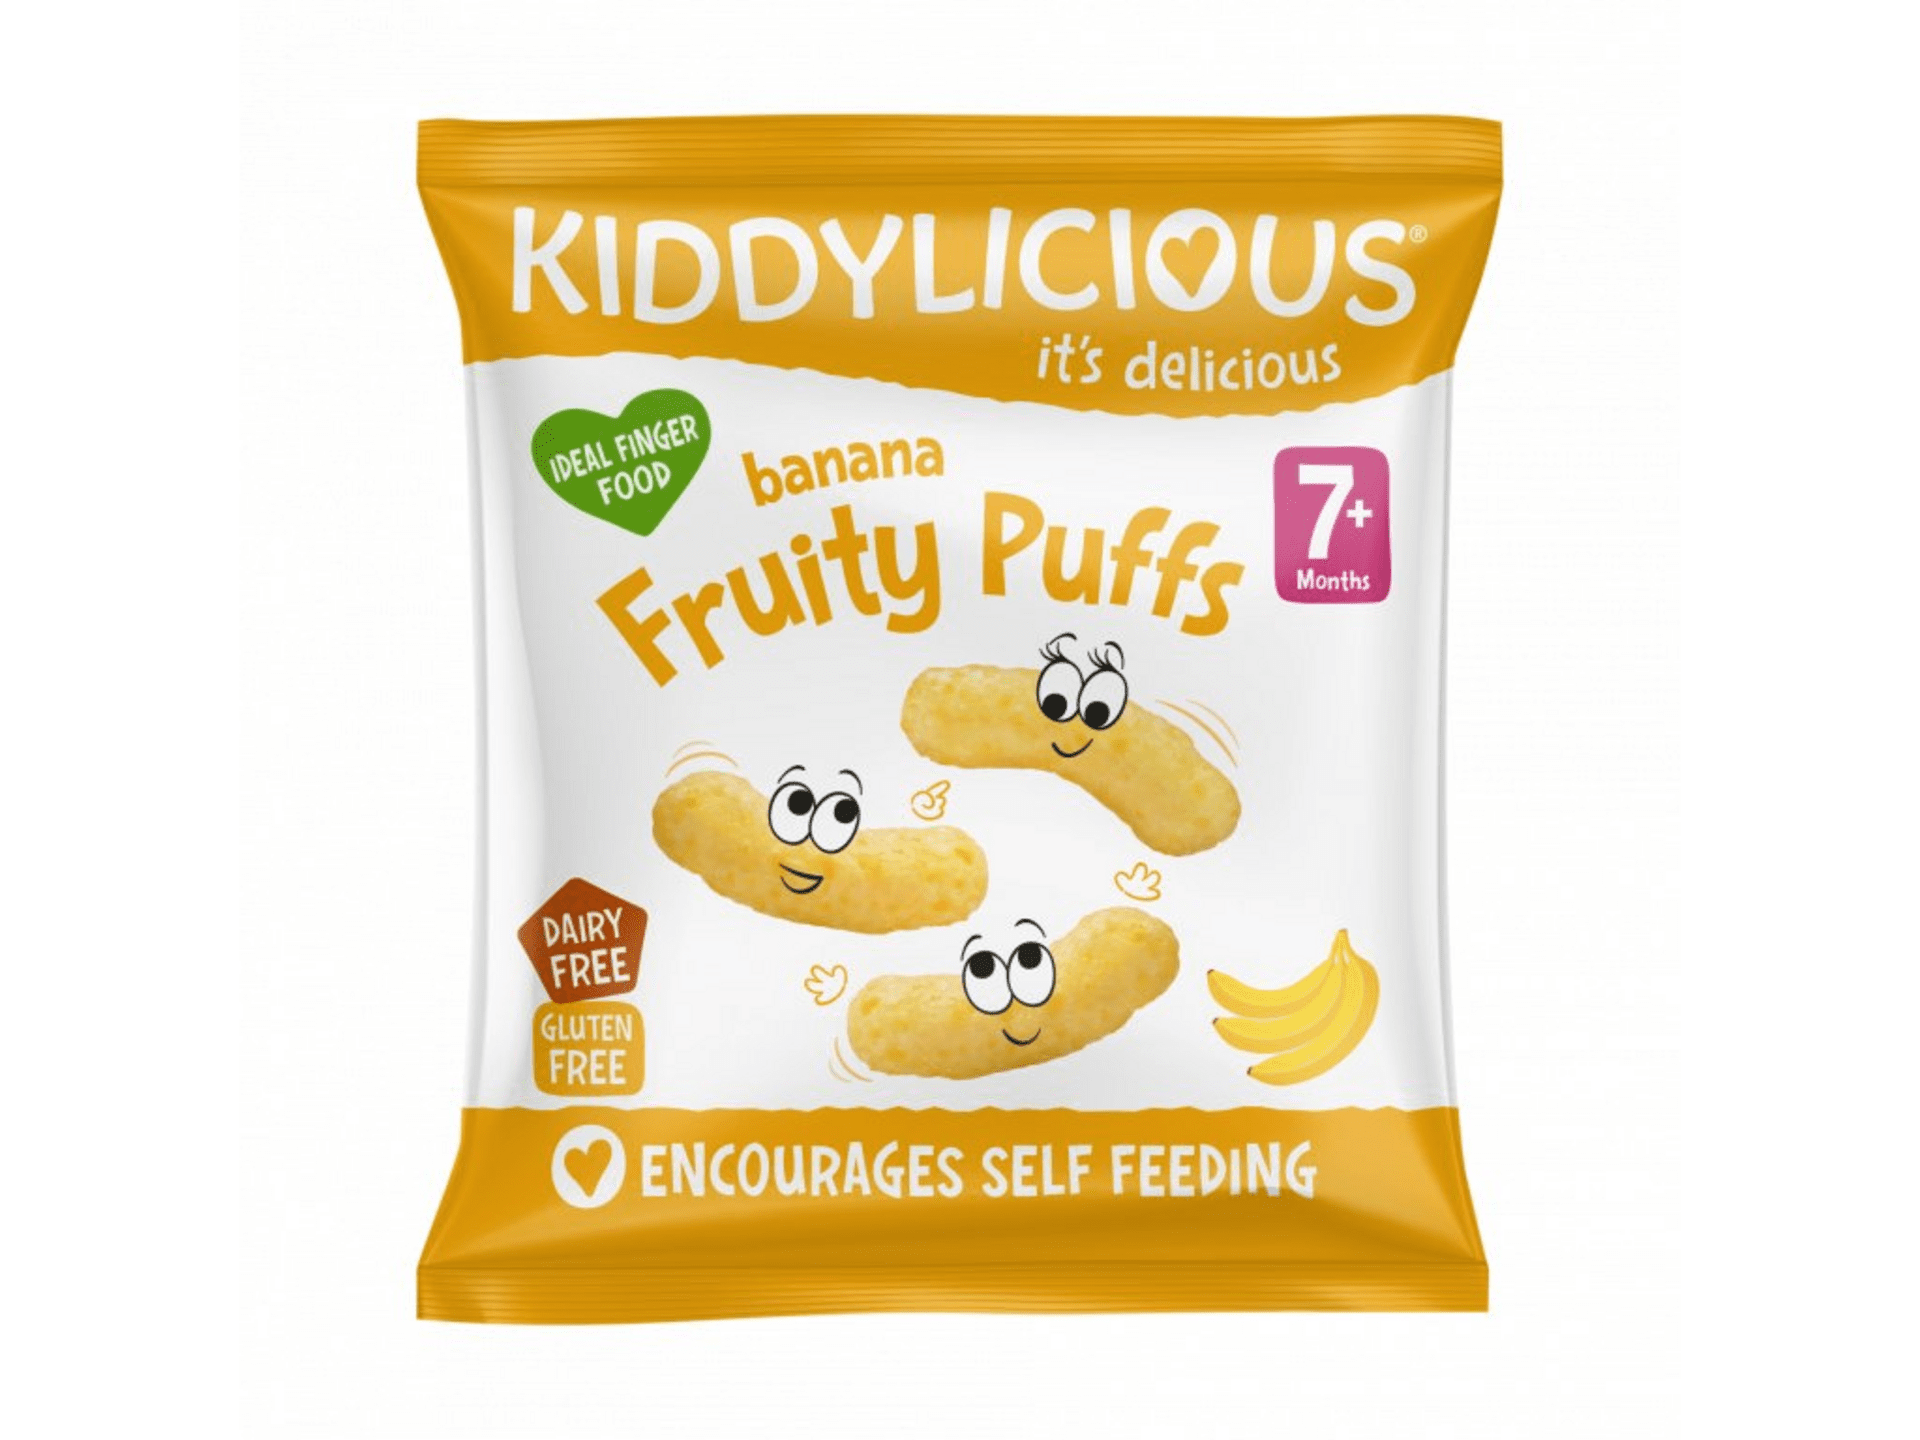 Kiddylicious veľké chrumky banánové 10 g